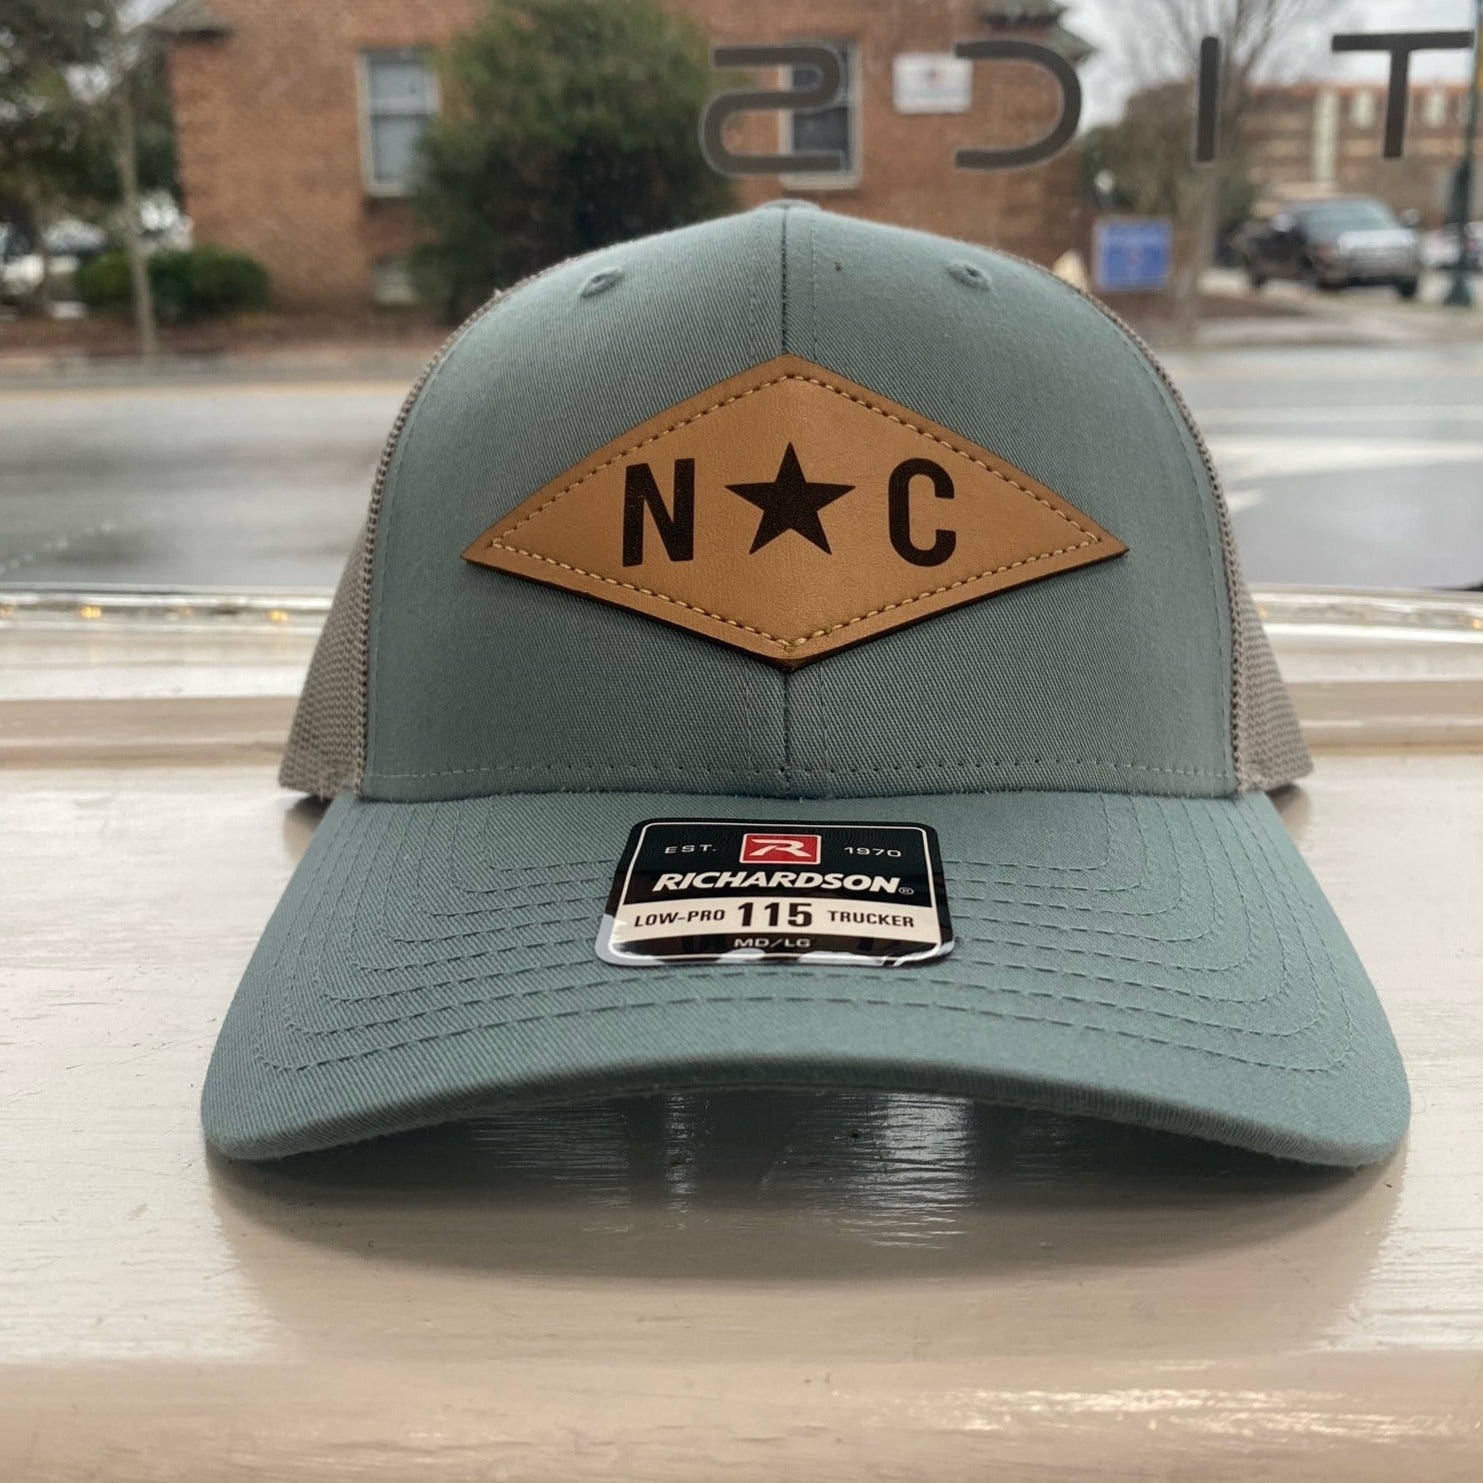 NC Diamond Leather Patch Hat